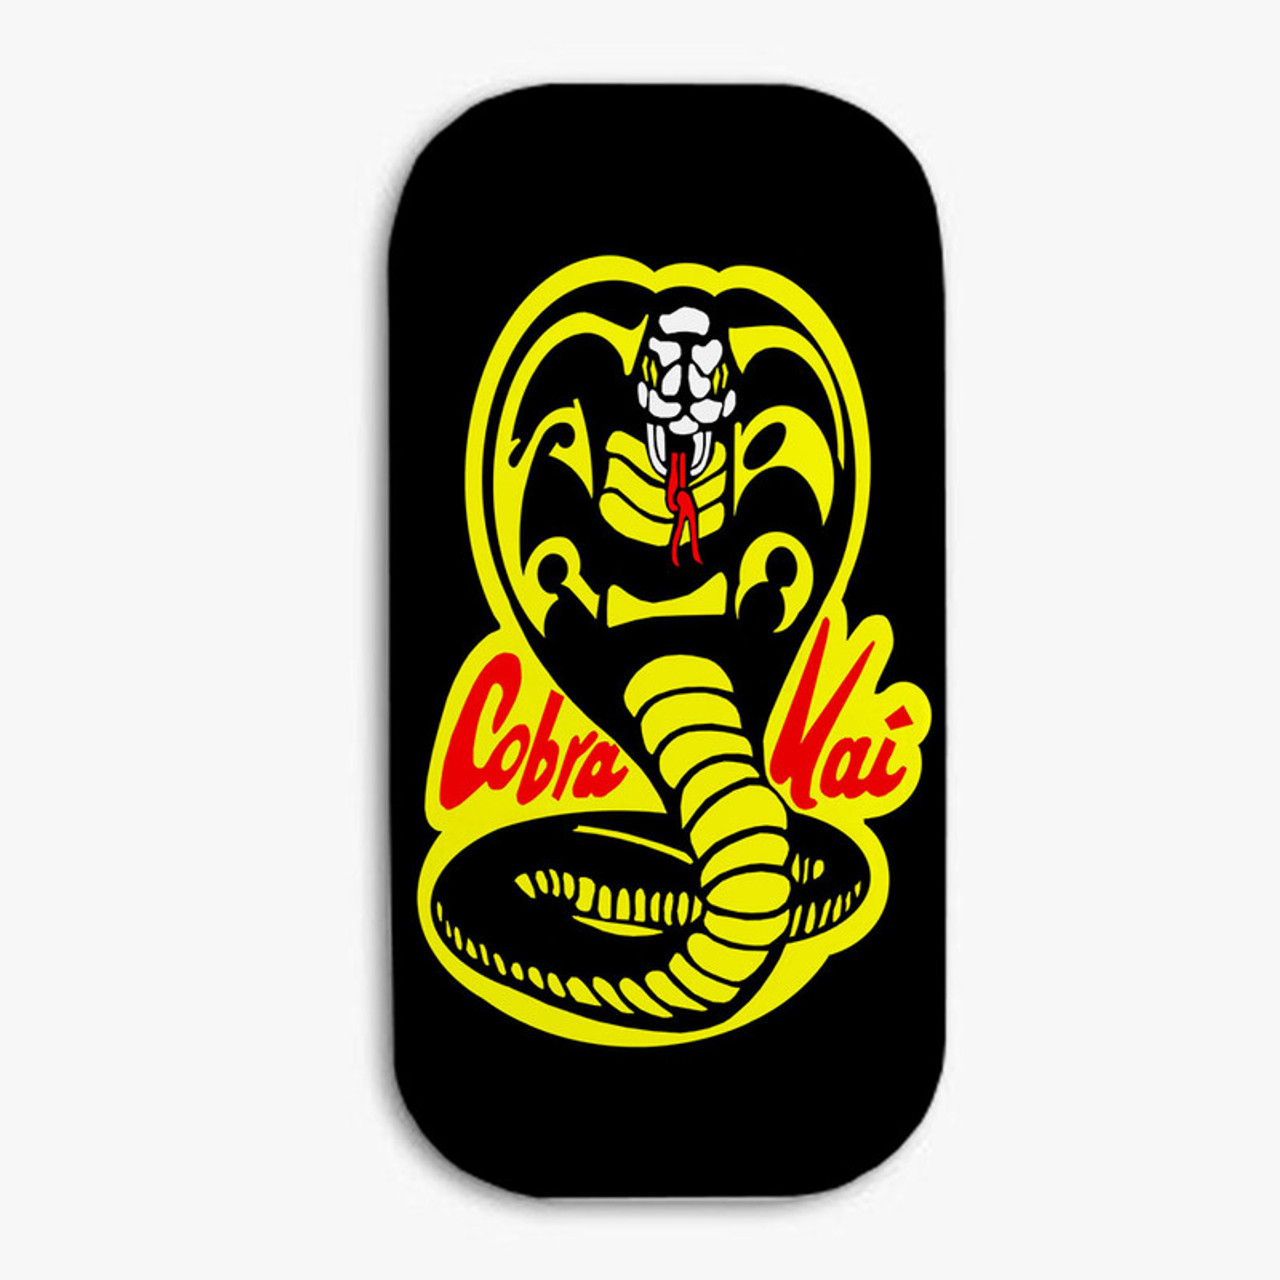 Pastele Cobra Kai Phone Click-On Grip Custom Pop Up Stand Holder Apple  iPhone Samsung